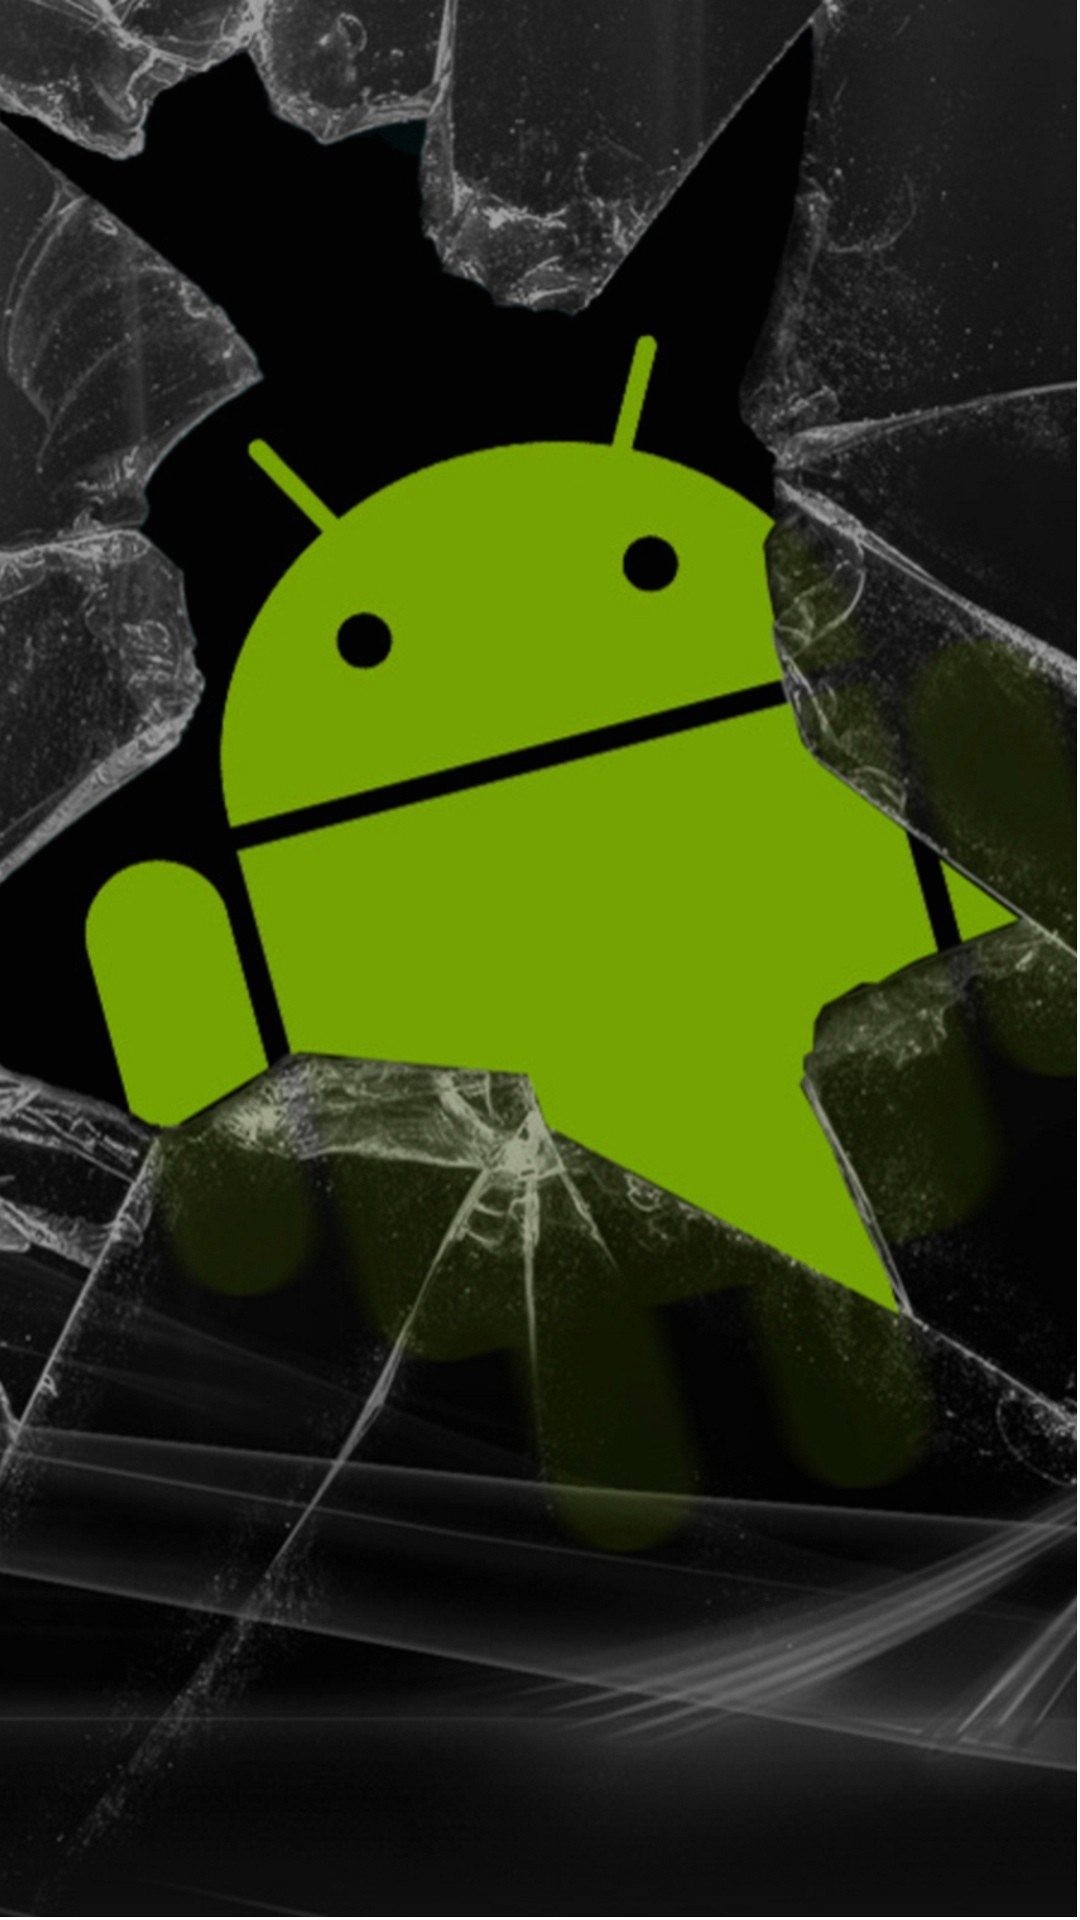 1080x1920 Wallpaper full hd 1080 x 1920 smartphone broken glass android